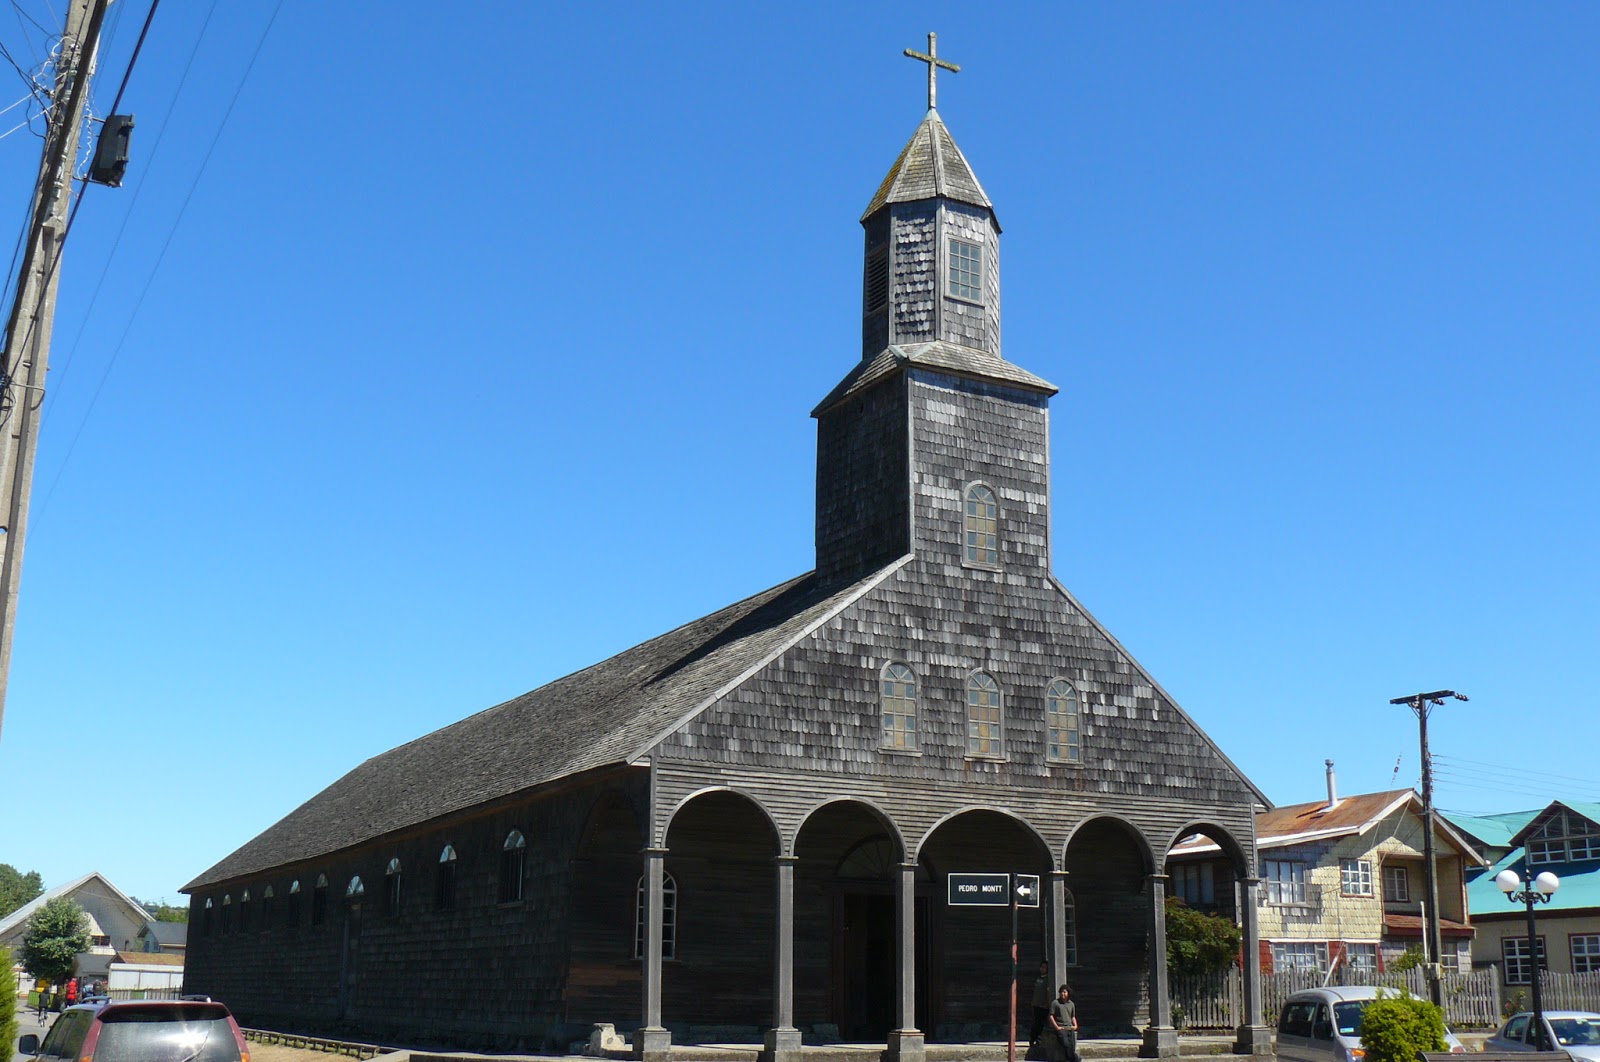 Iglesias de Chiloé - Patrimonio de la humanidad - Vidanatural.net